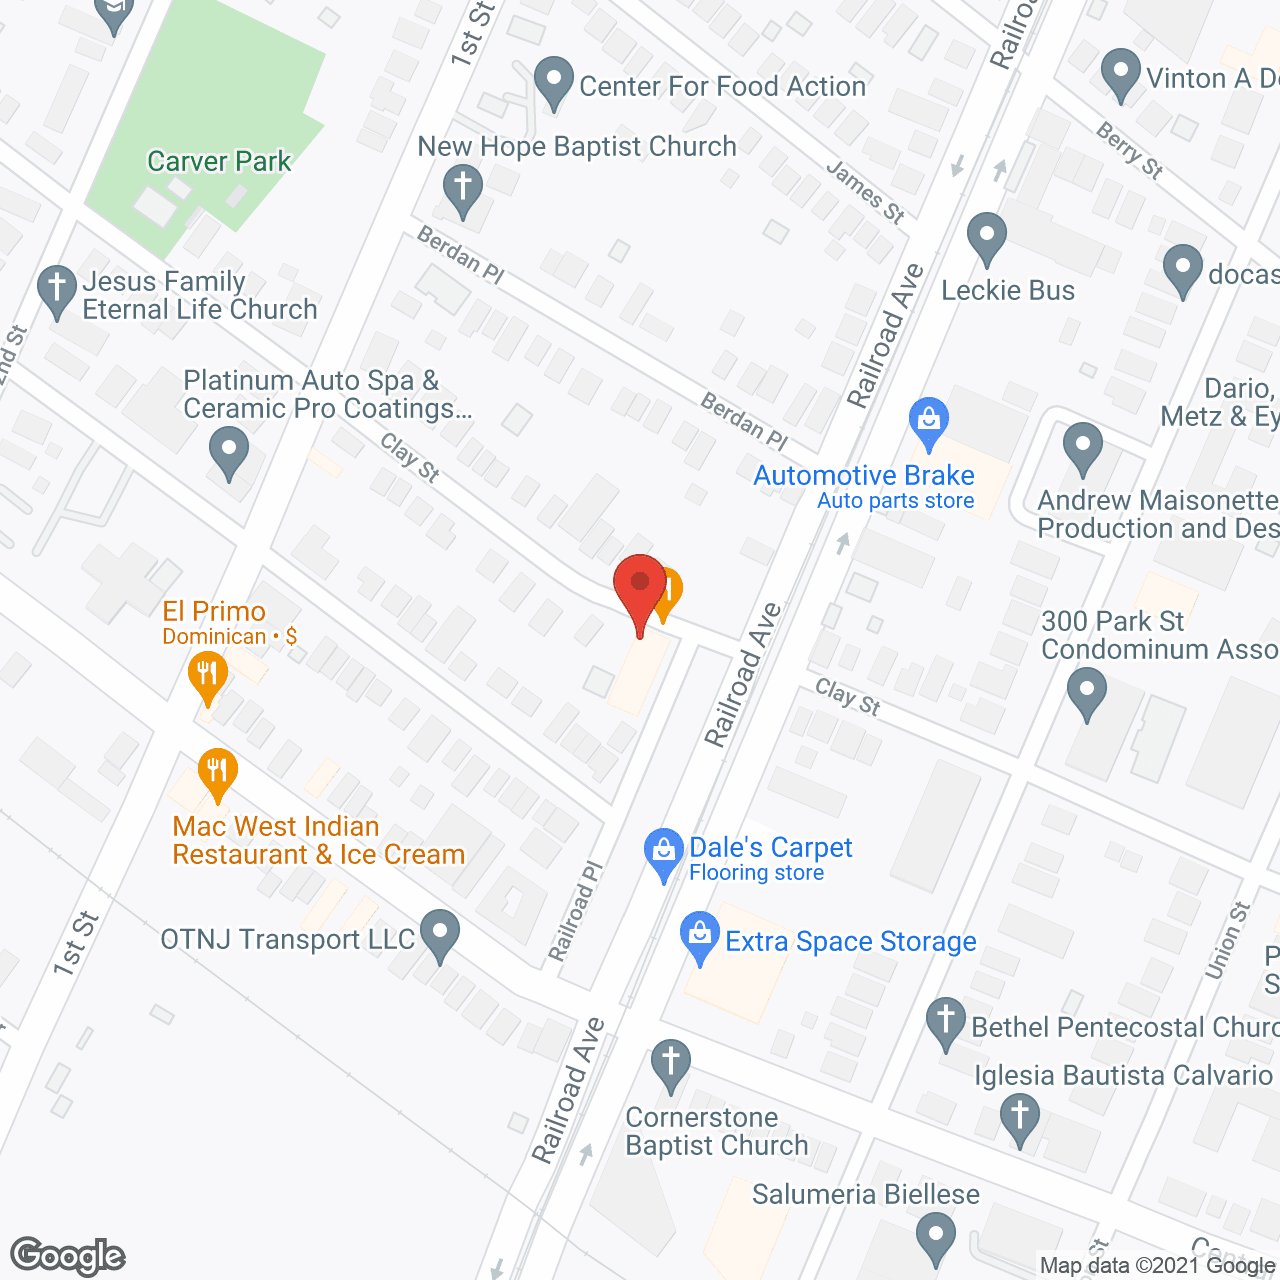 CareTen Inc. - Hackensack, NJ in google map